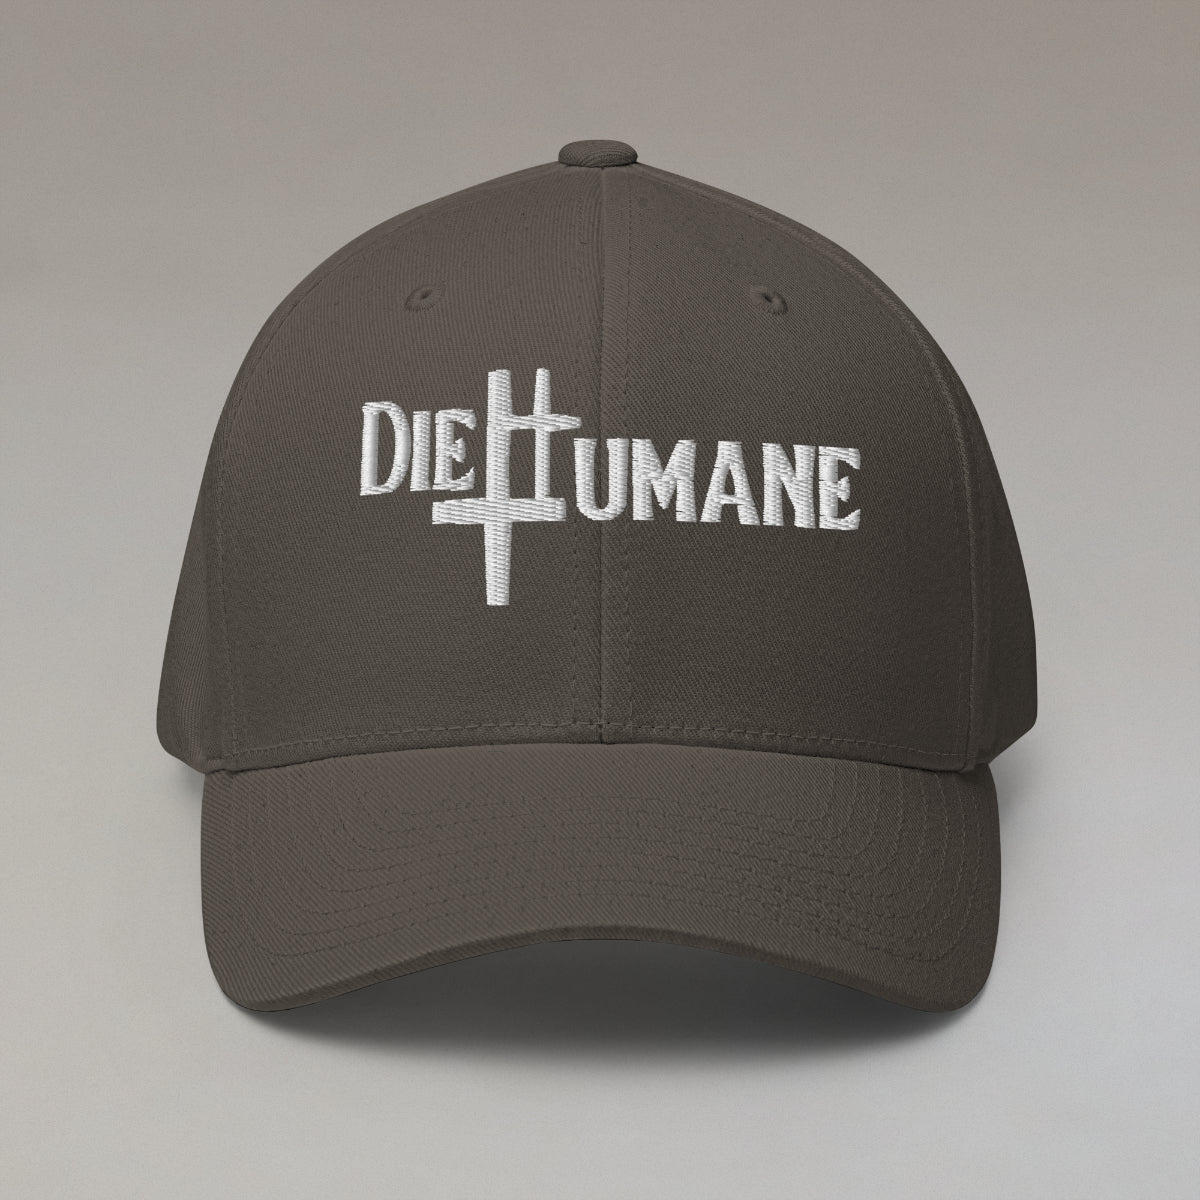 DieHumane hat. Dark grey baseball cap with white stitching, embroidery